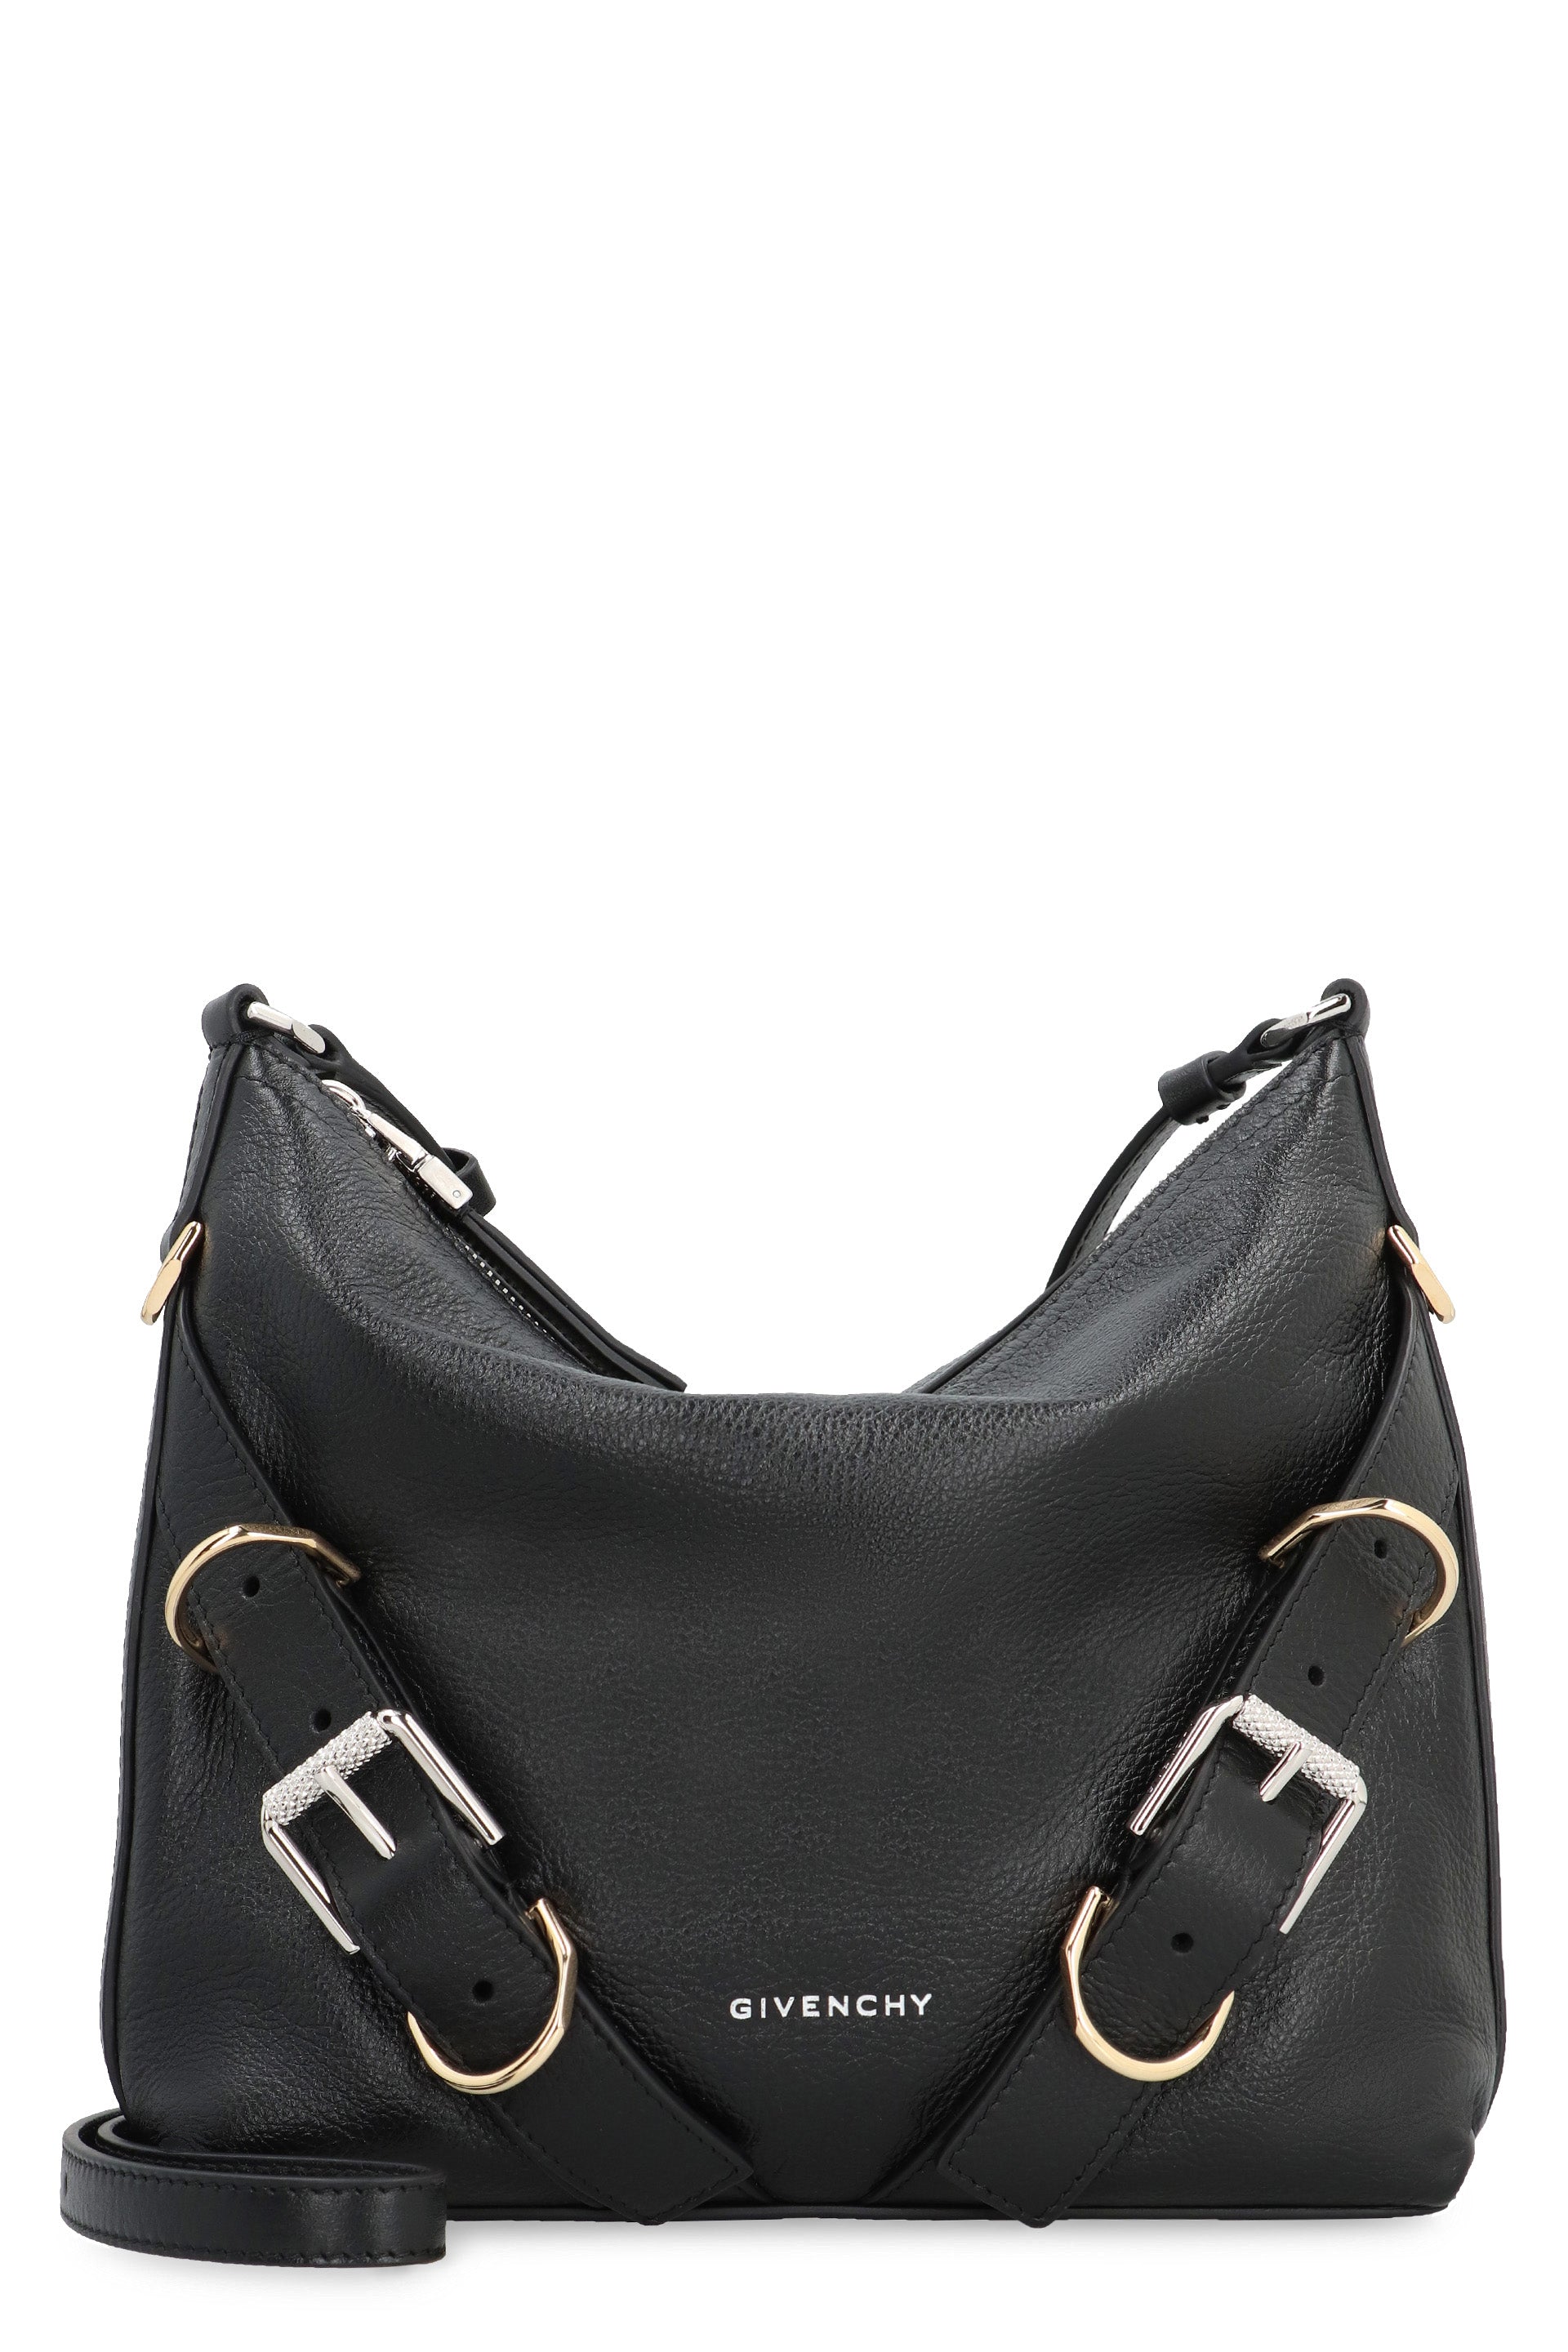 Shop Givenchy Stylish Black Crossbody Bag For Women